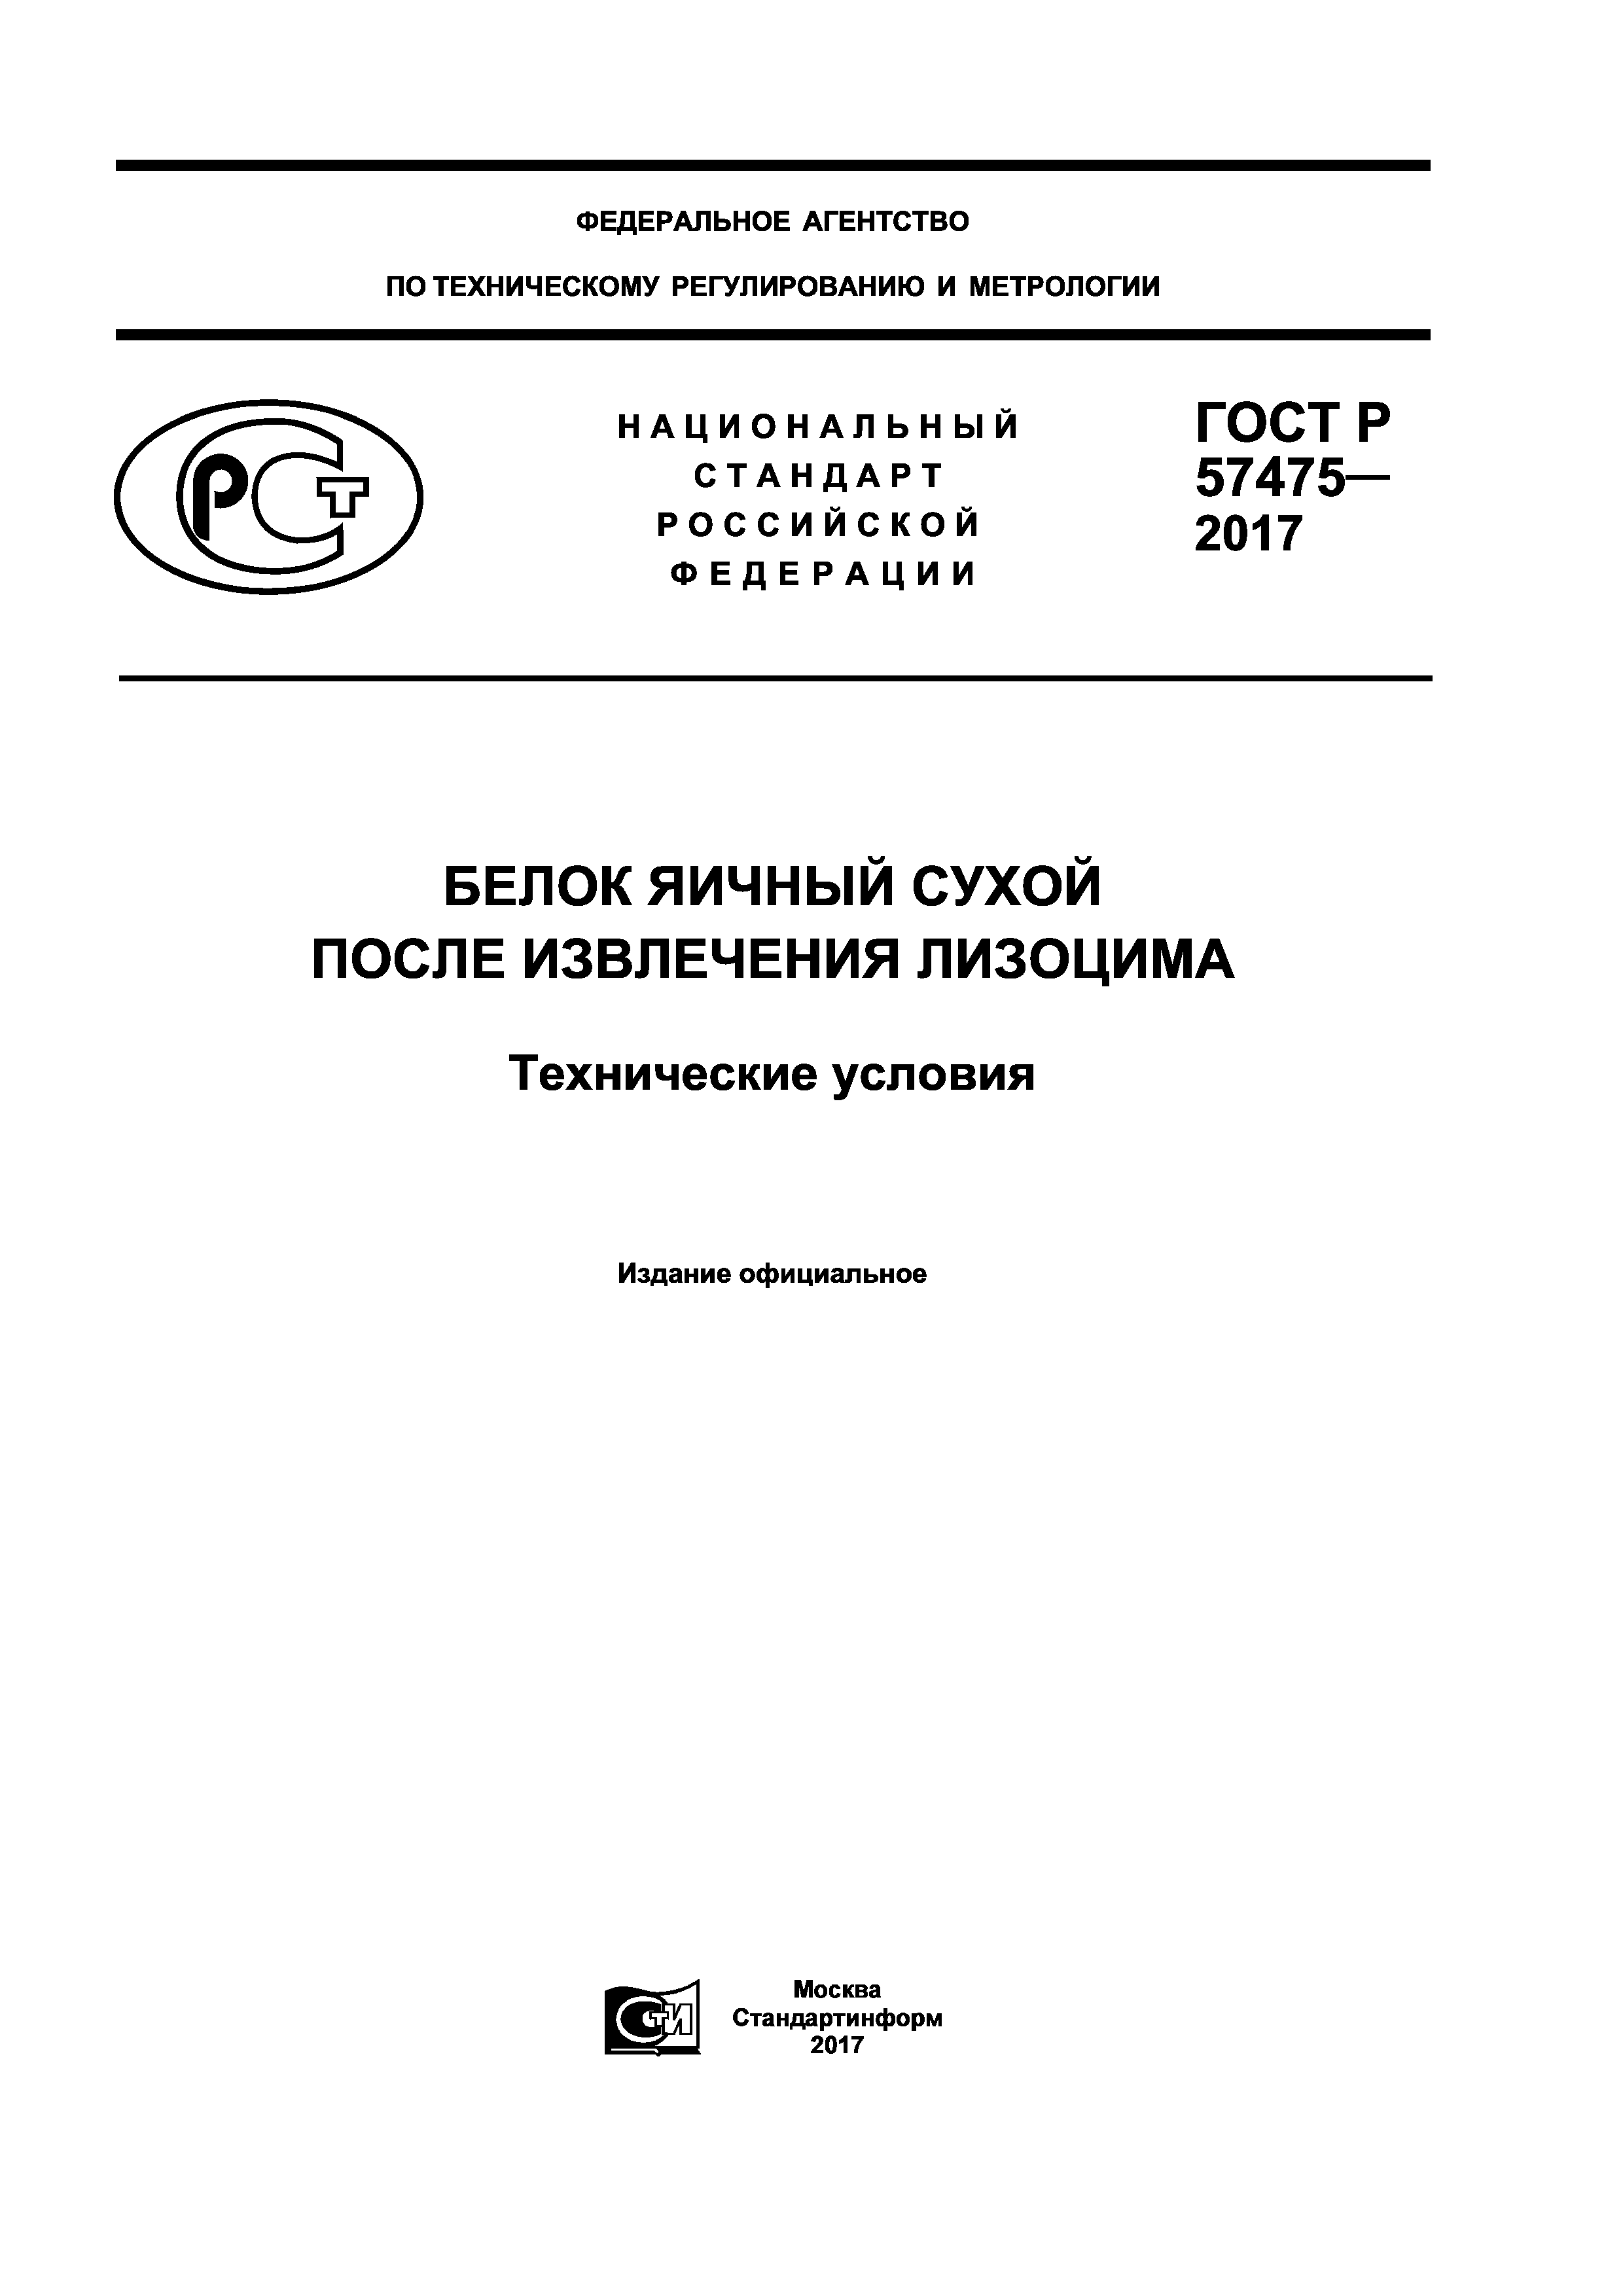 ГОСТ Р 57475-2017